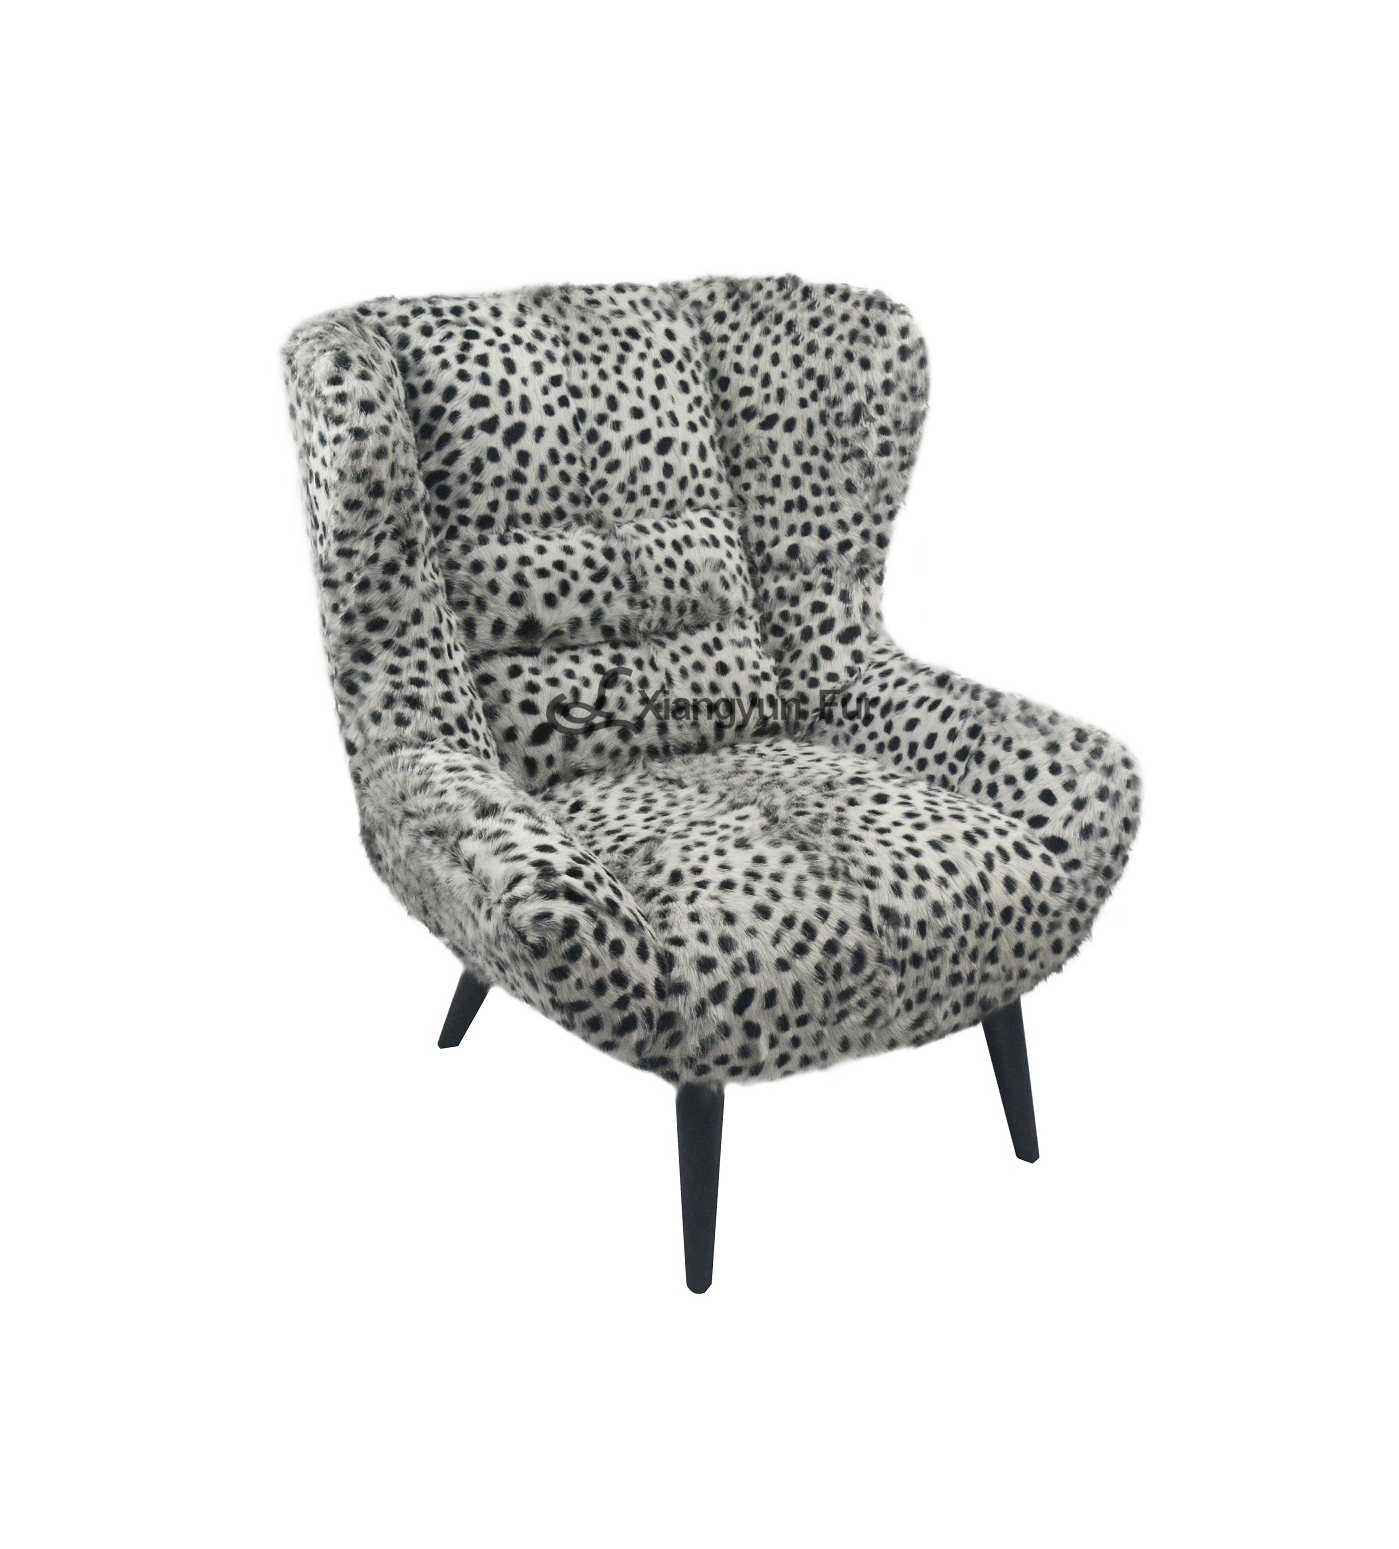 100% Goat Fur Grey Leopard Chair